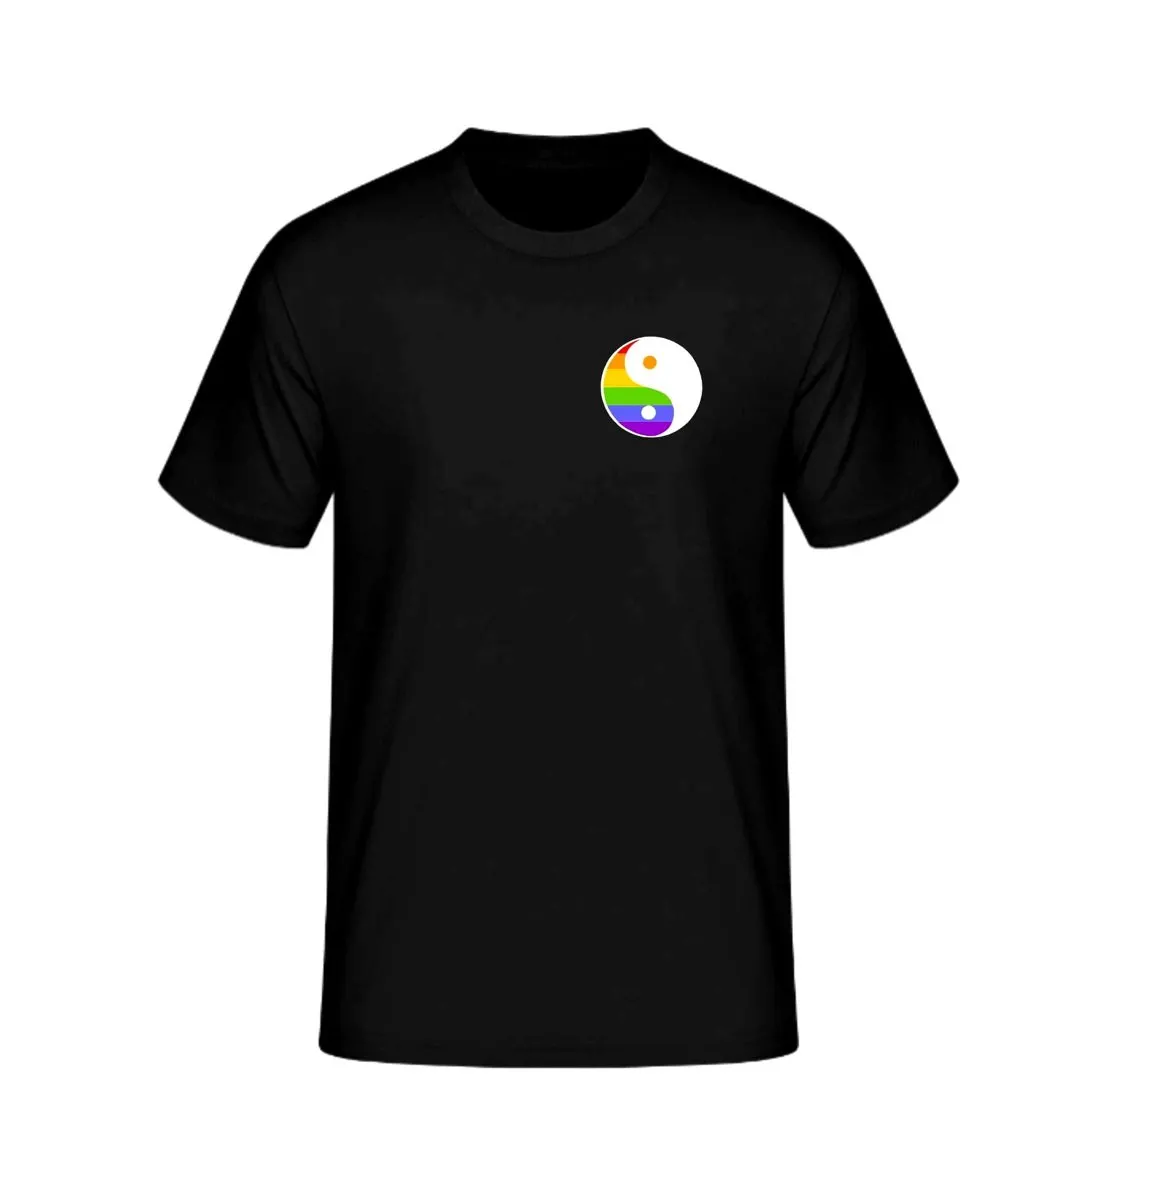 T-shirt Ying Yang regenboog zwart | Pride